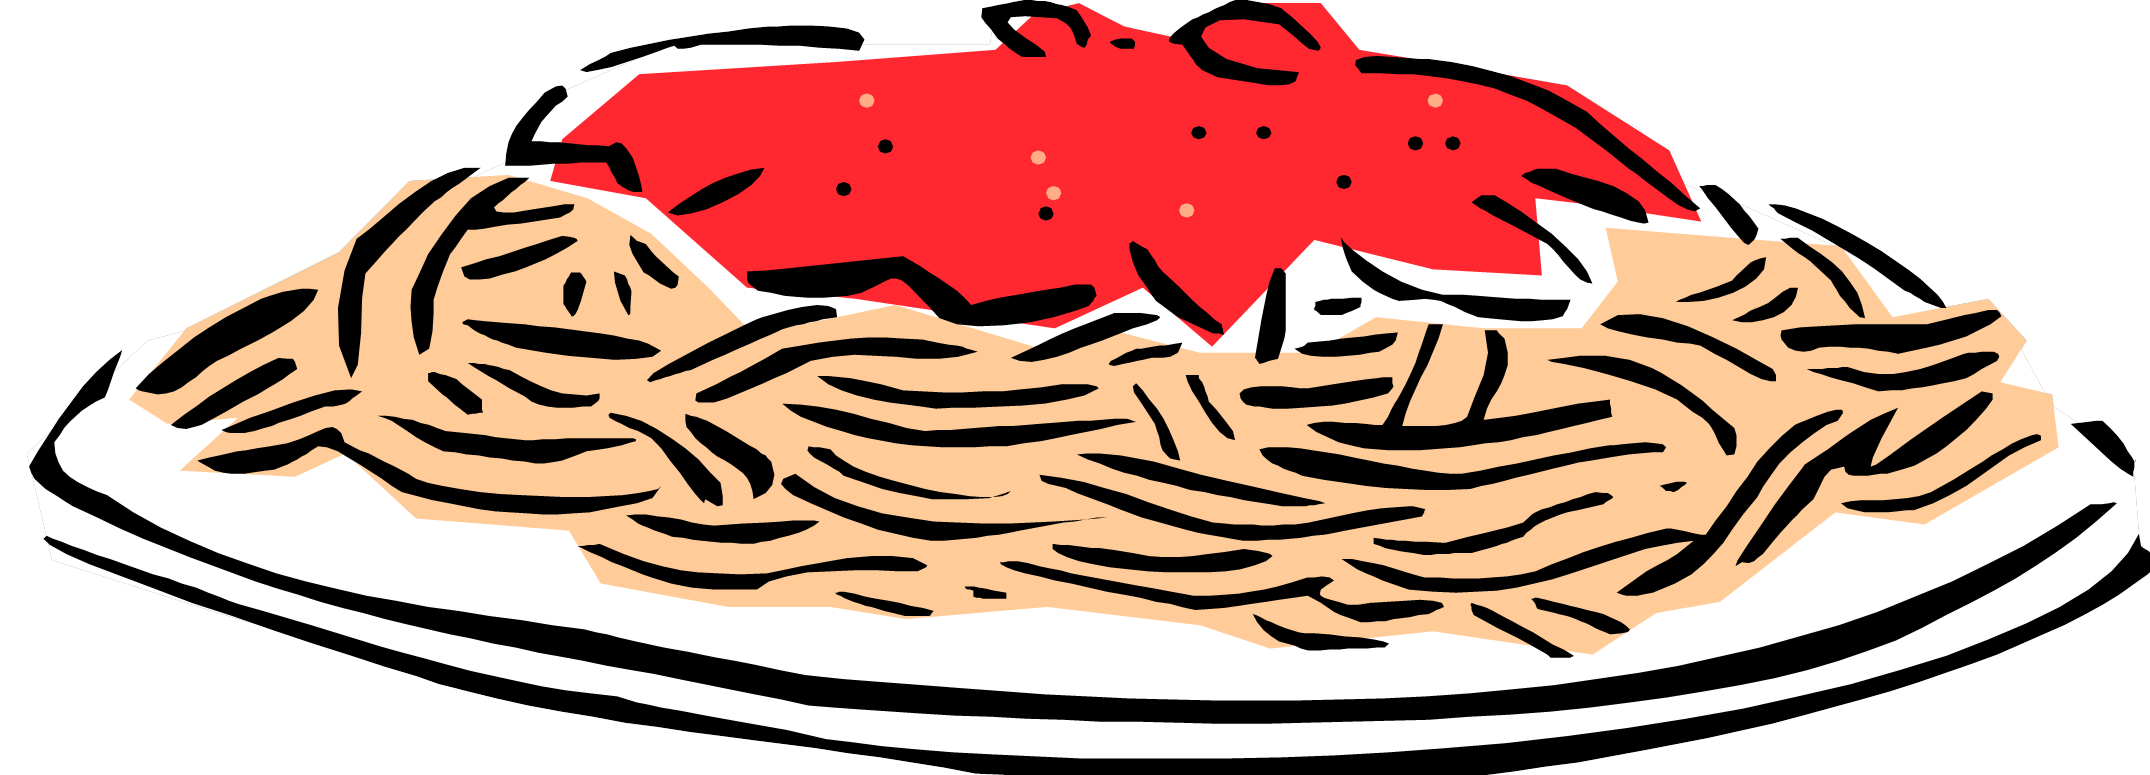 Spaghetti Cartoon Download